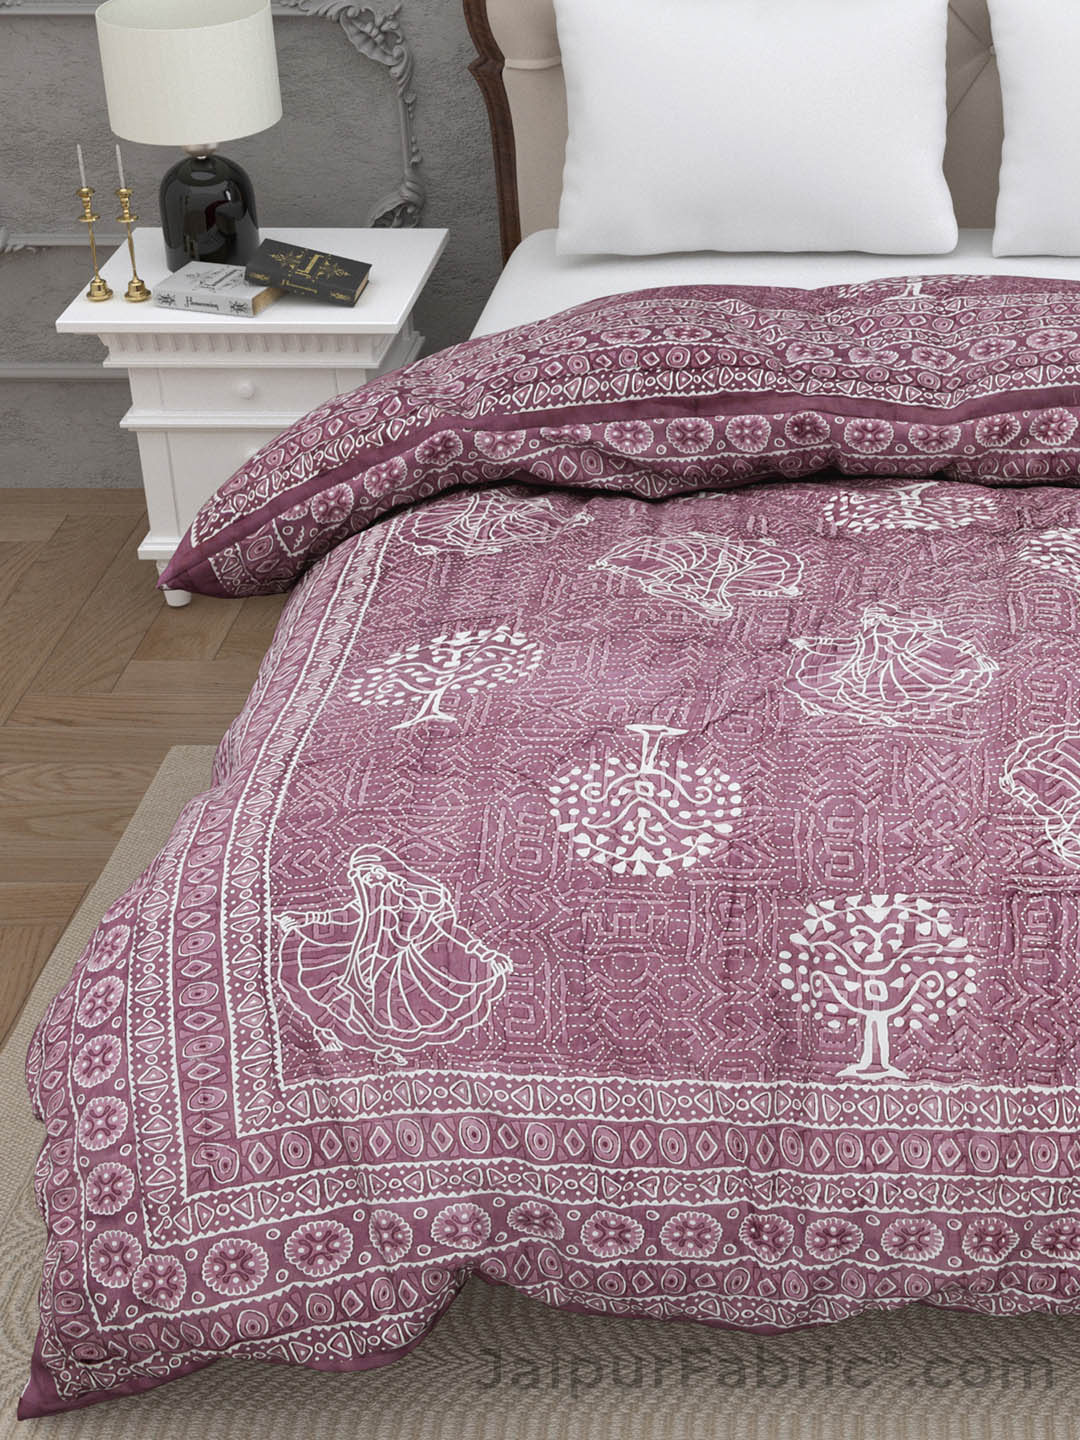 Jaipuri Rajai Daabu Ghoomar 300GSM Fine Cotton Purple Double Bed Quilt